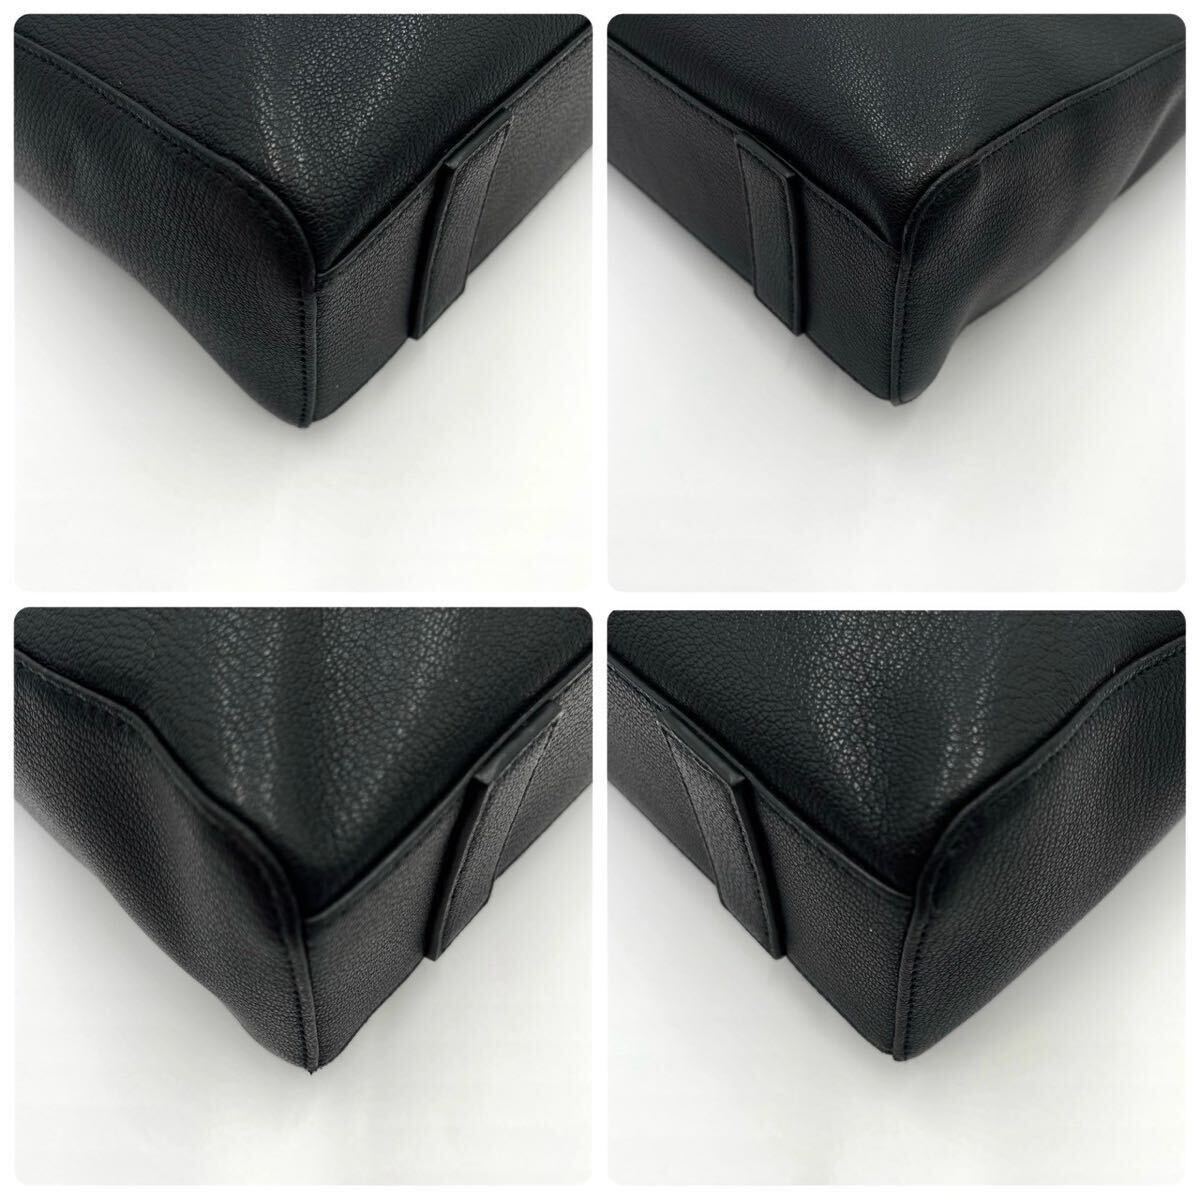 1 jpy / almost unused goods * Paul Smith Paul Smith tote bag business bag shoulder ..A4 storage multi stripe Logo present black black leather 